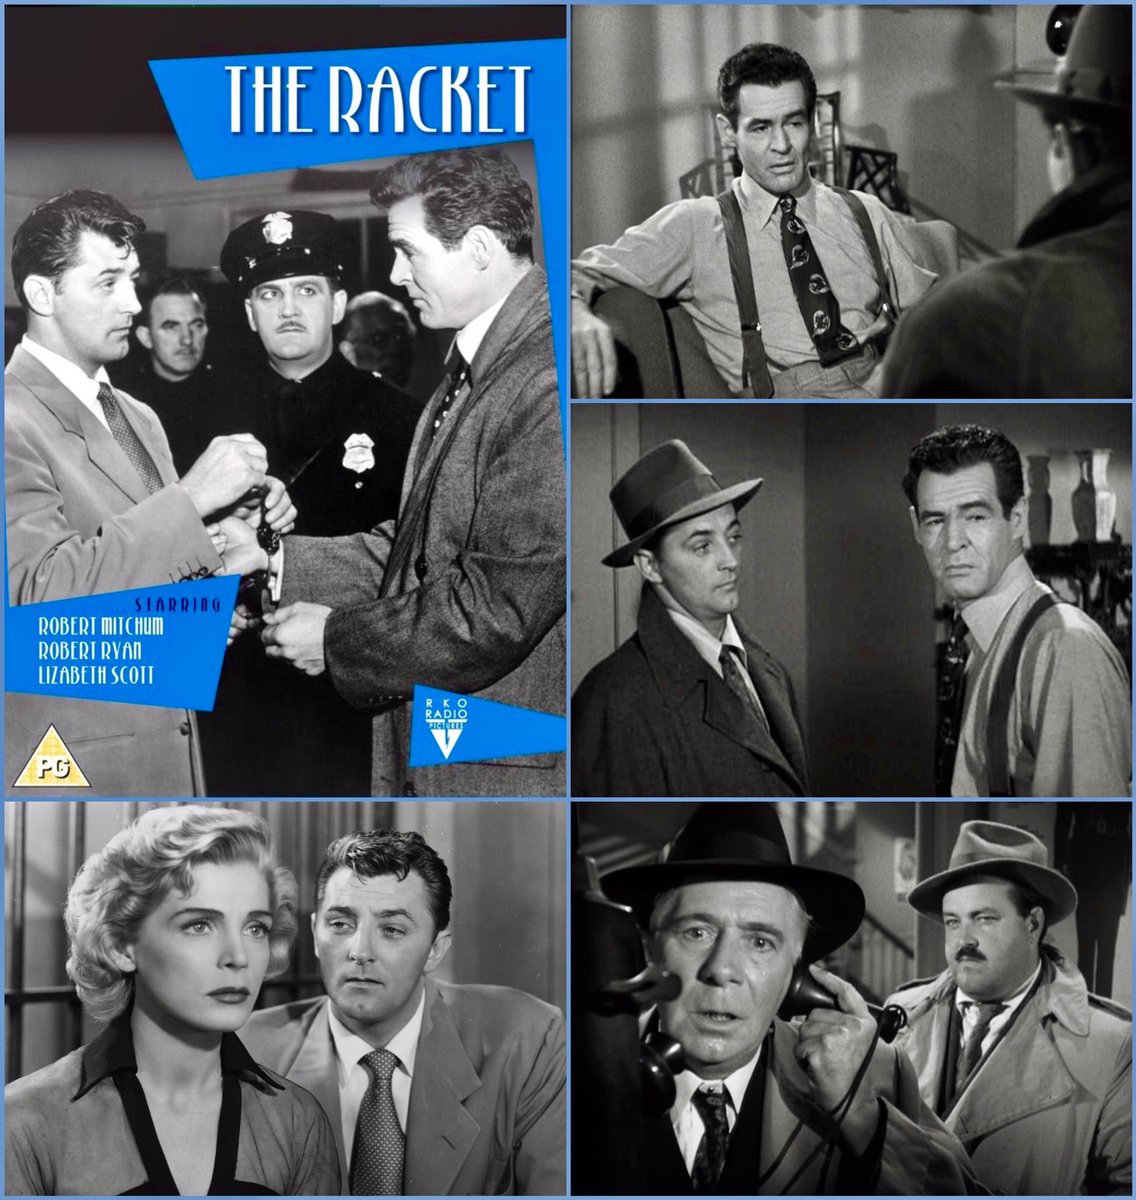 “THE RACKET” (1951) dir. John Cromwell

#RobertMitchum
#RobertRyan
#LizabethScott
#WilliamConrad
#RayCollins 

🎞#FilmNoir

🎬#FilmTwitter